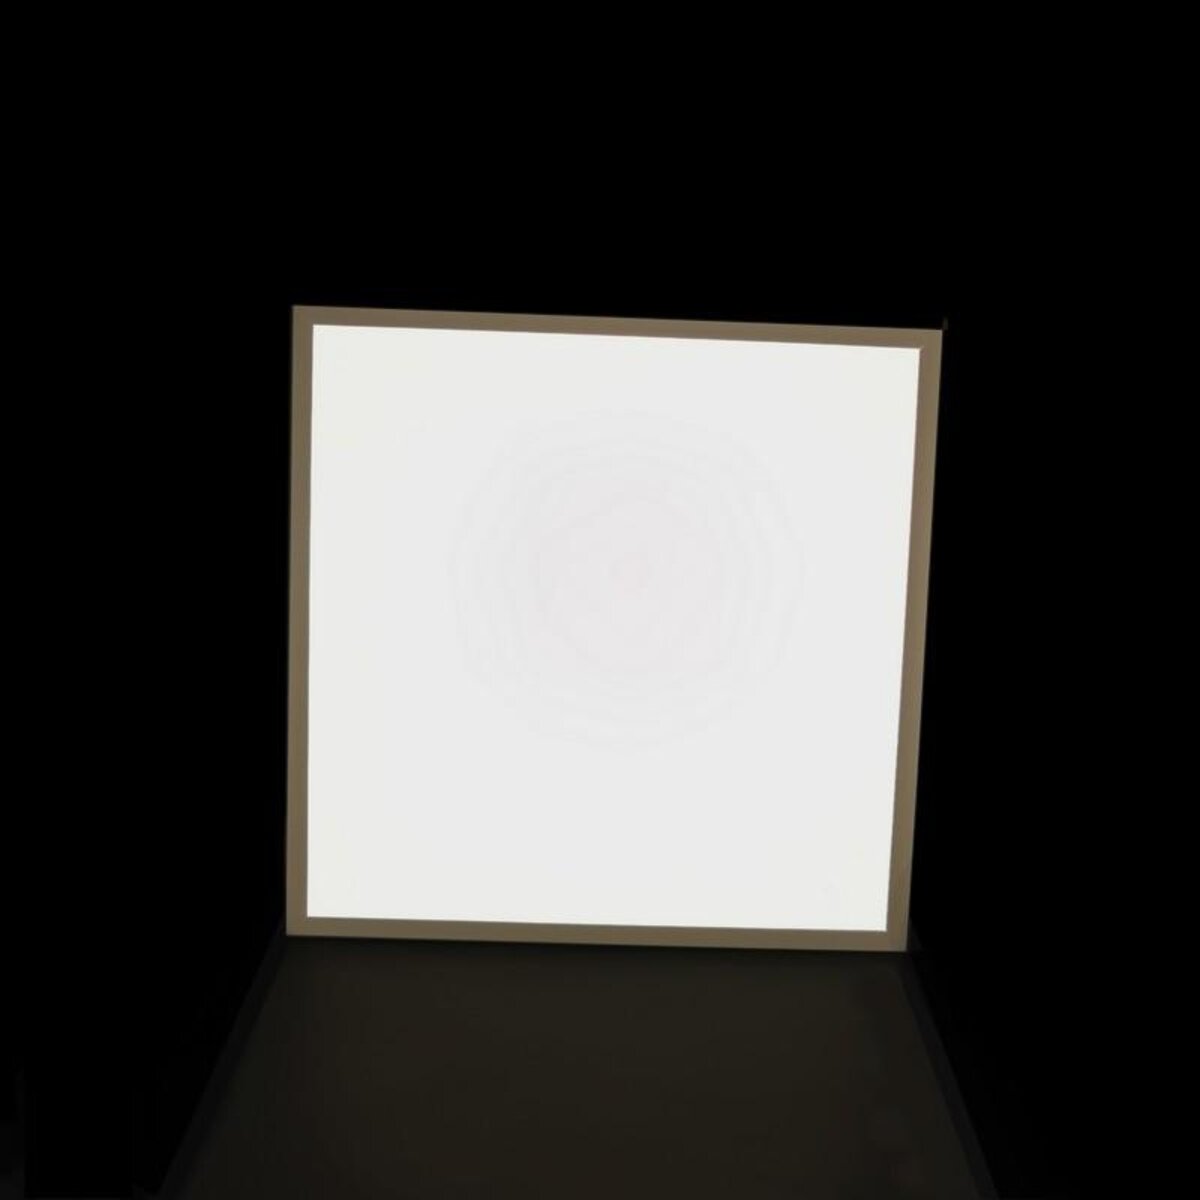 Surface panneau LED 60x60 48W marque blanche